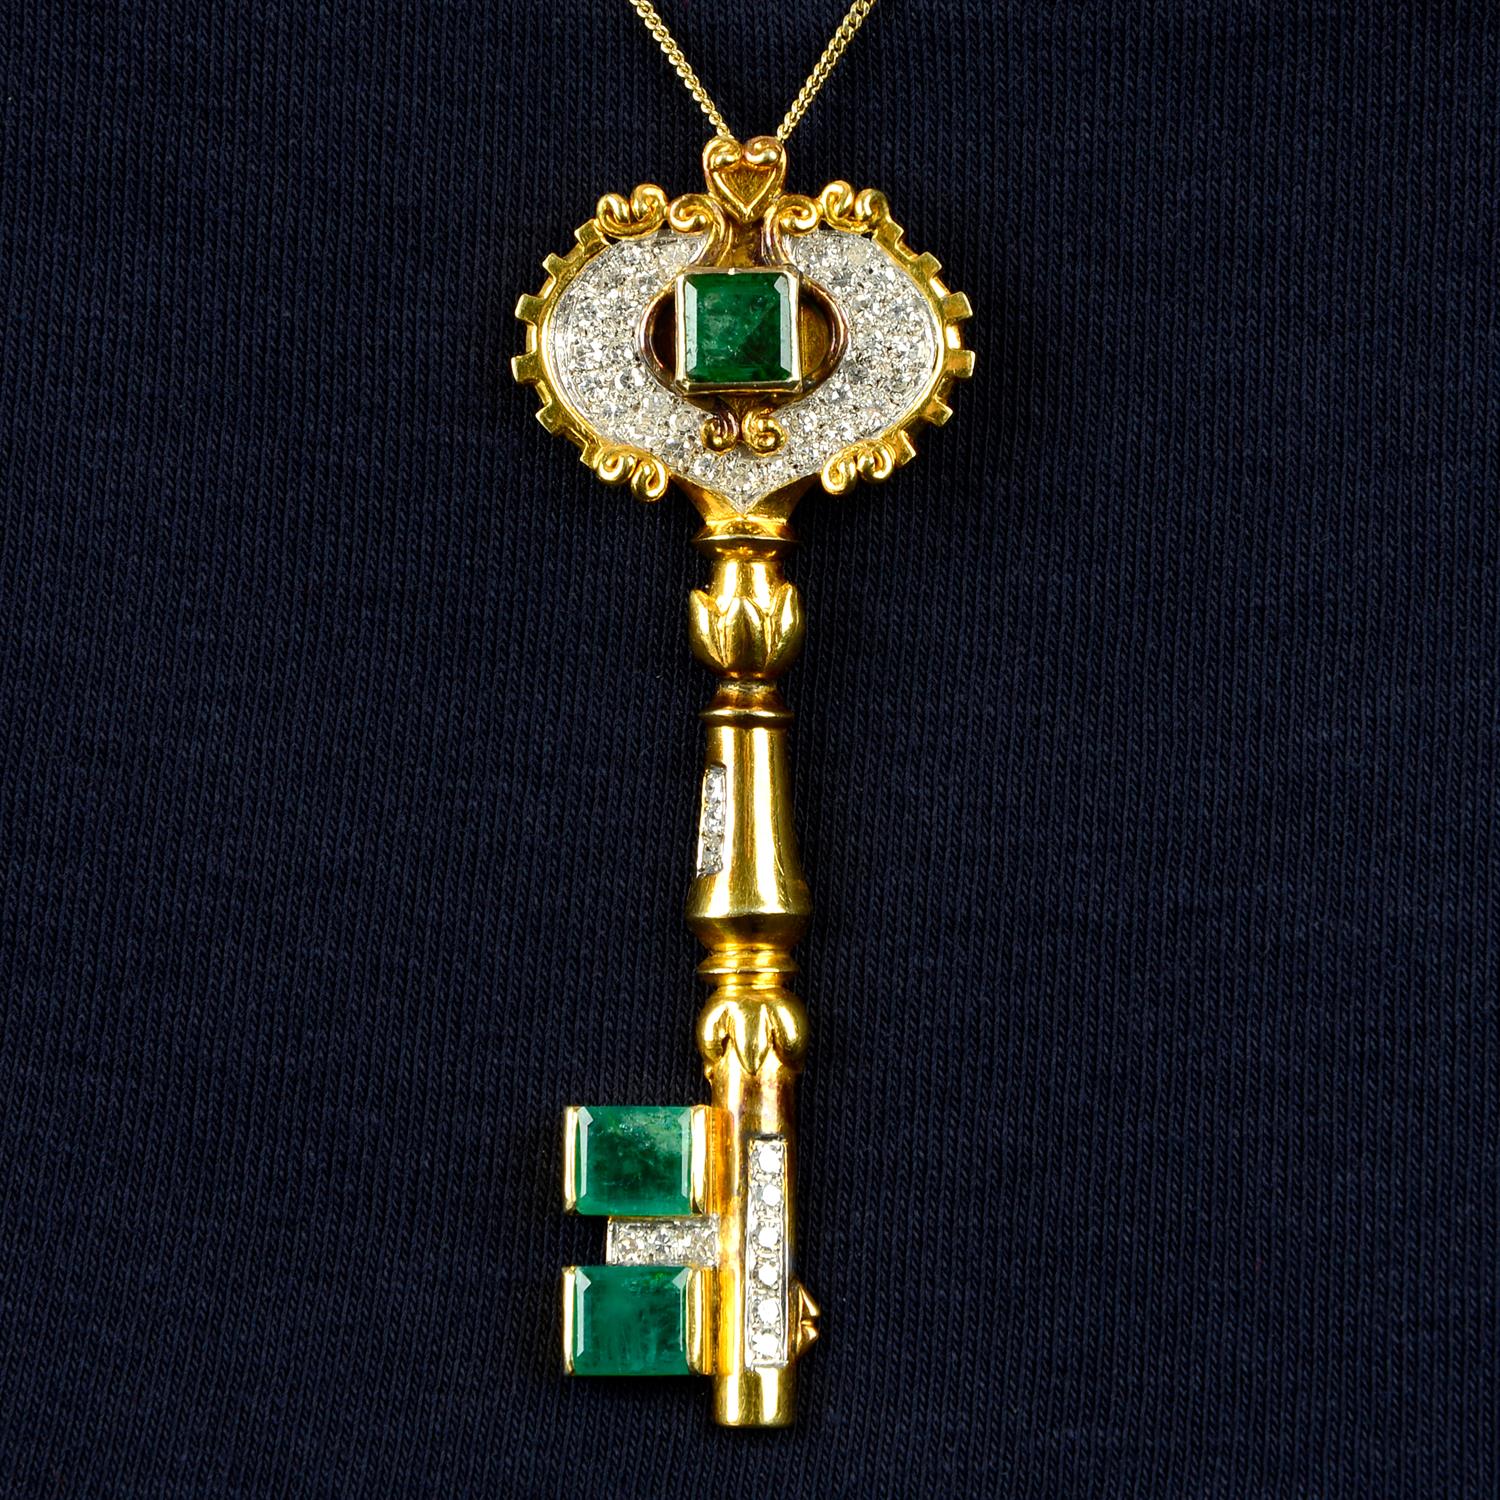 A mid 20th century gold emerald and single-cut diamond key pendant.